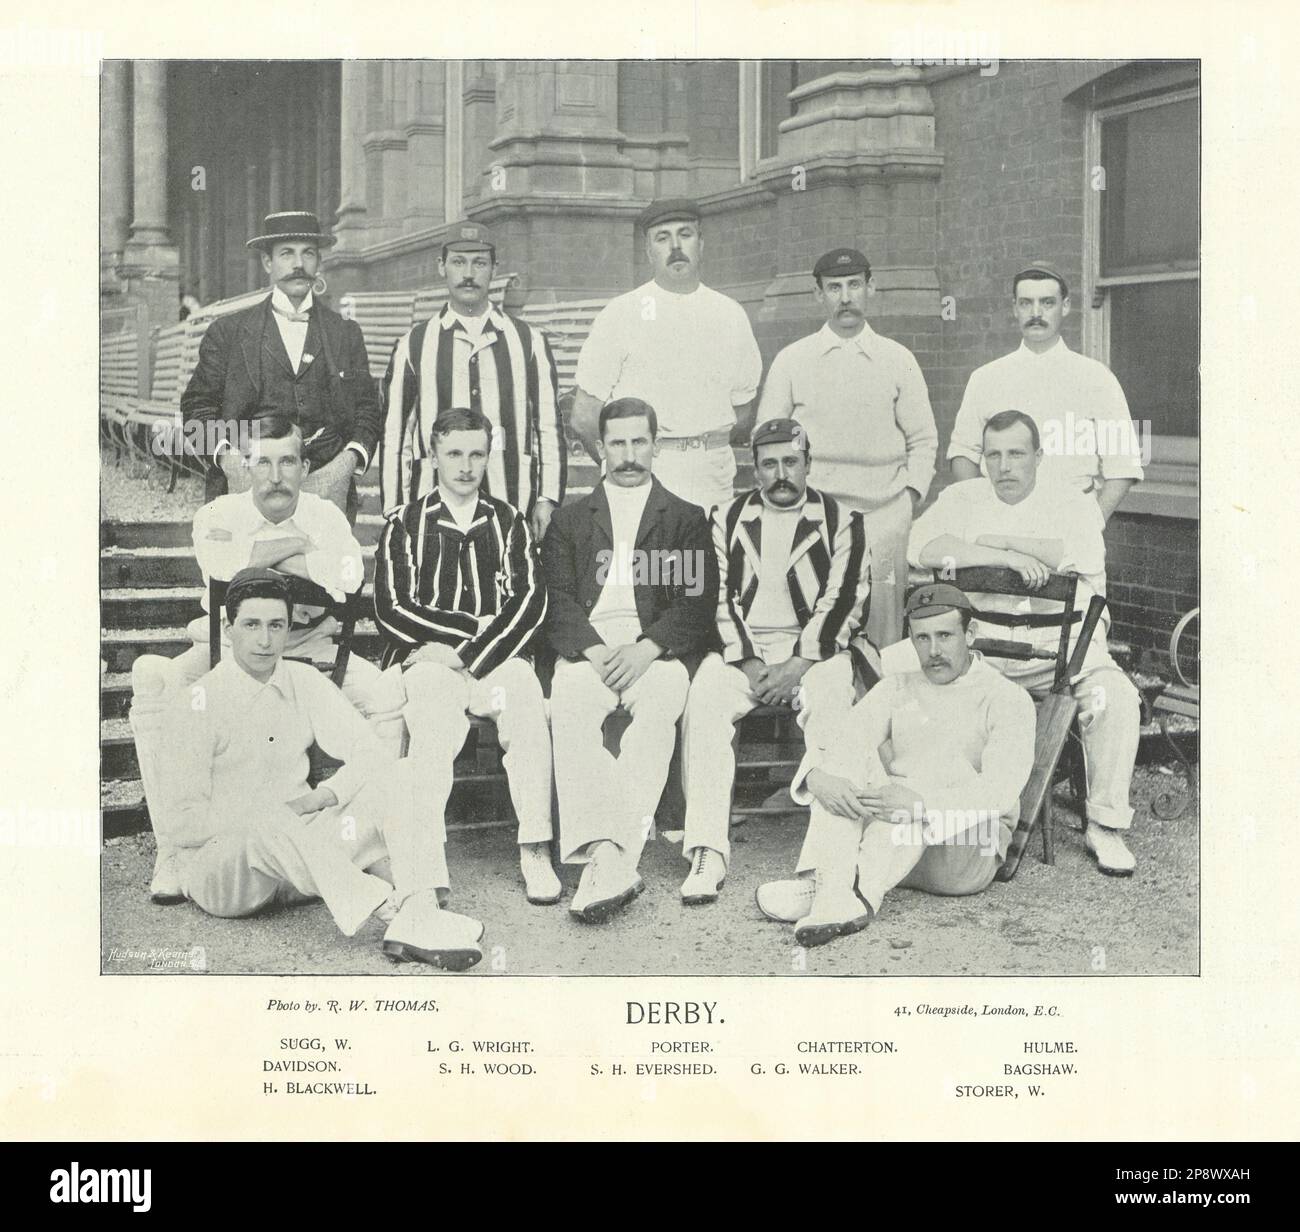 Derbyshire County Cricket Team Sugg Wright Wood Porter Walker Hulme Storer 1895 Stock Photo